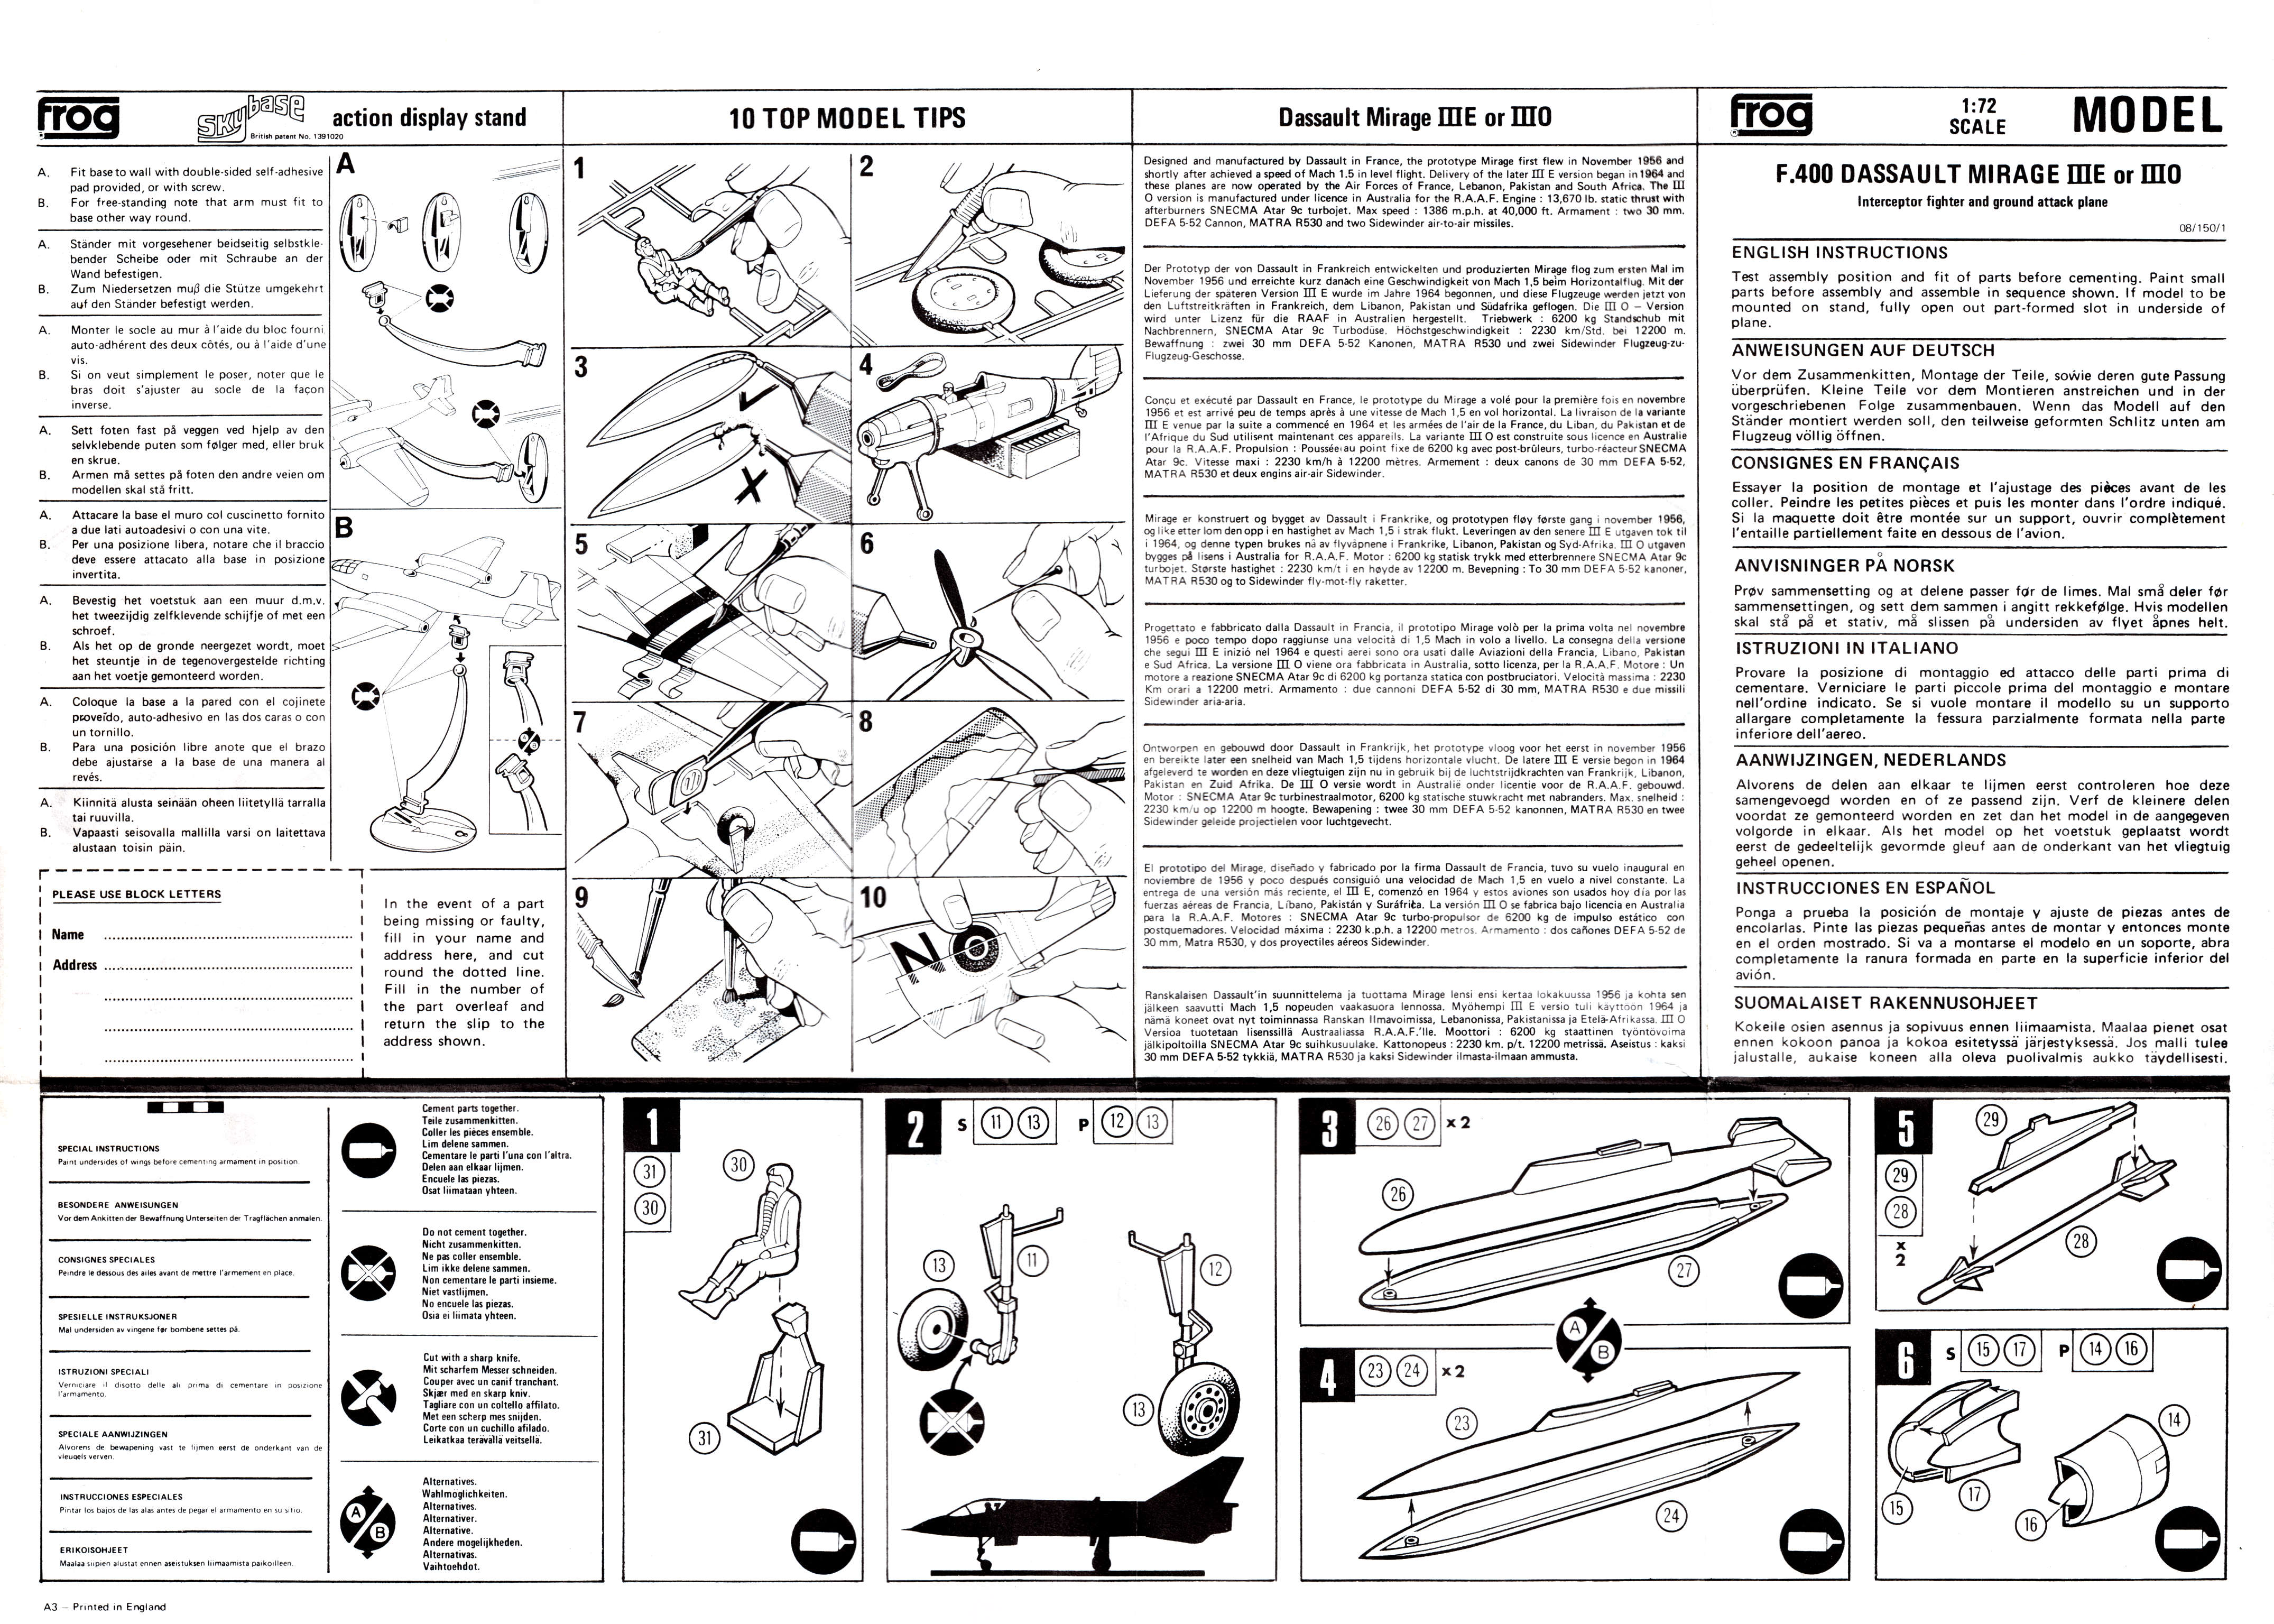 Instructions leaflet FROG F400 Mirage IIIE/O Interceptor / Ground Attack, 1975